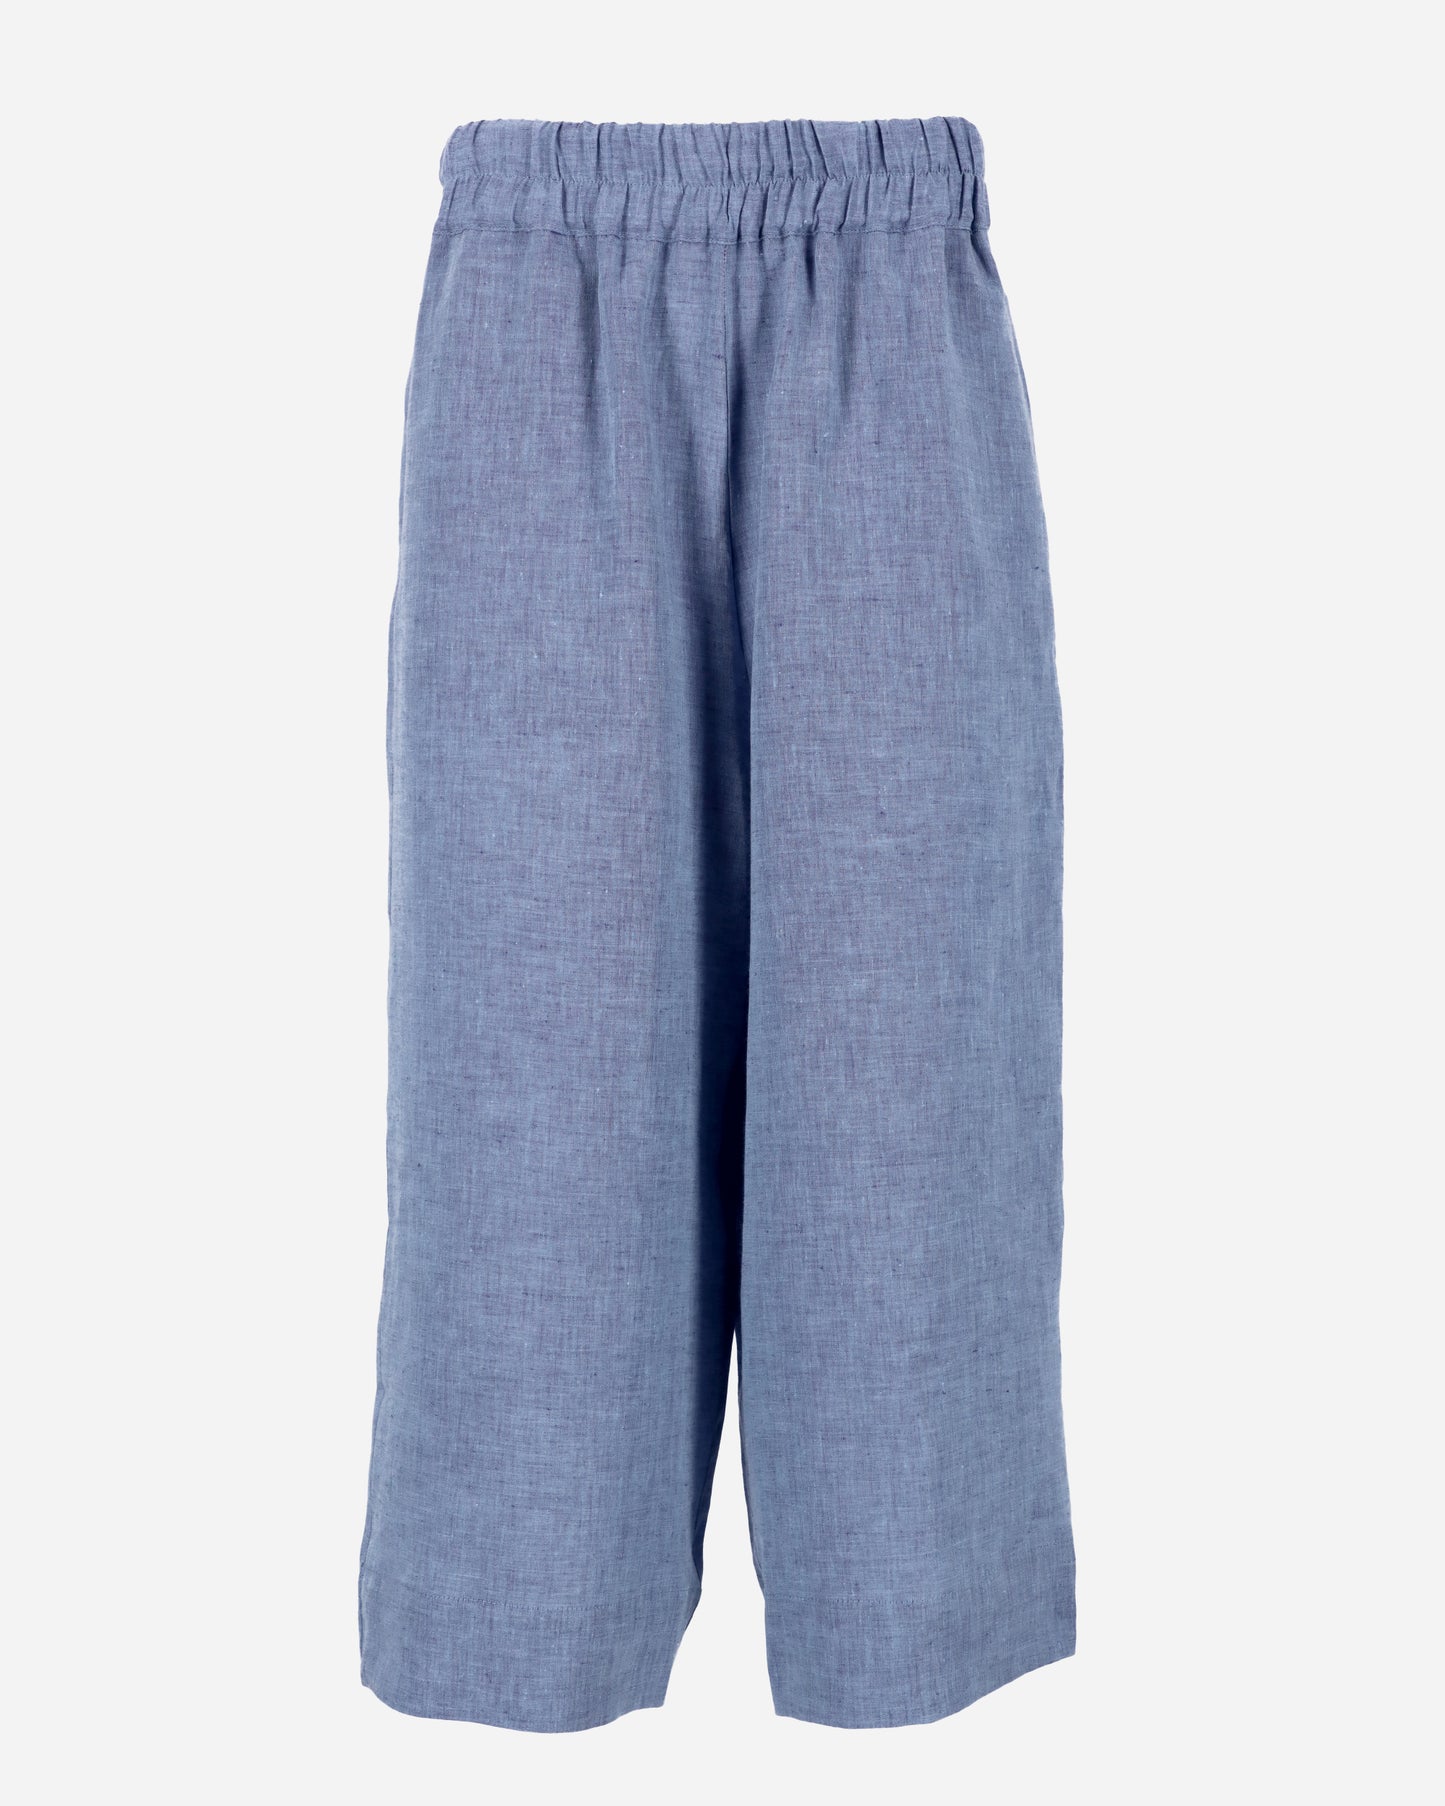 Wide leg linen culotte pants BRUNY in Denim chambray - MagicLinen